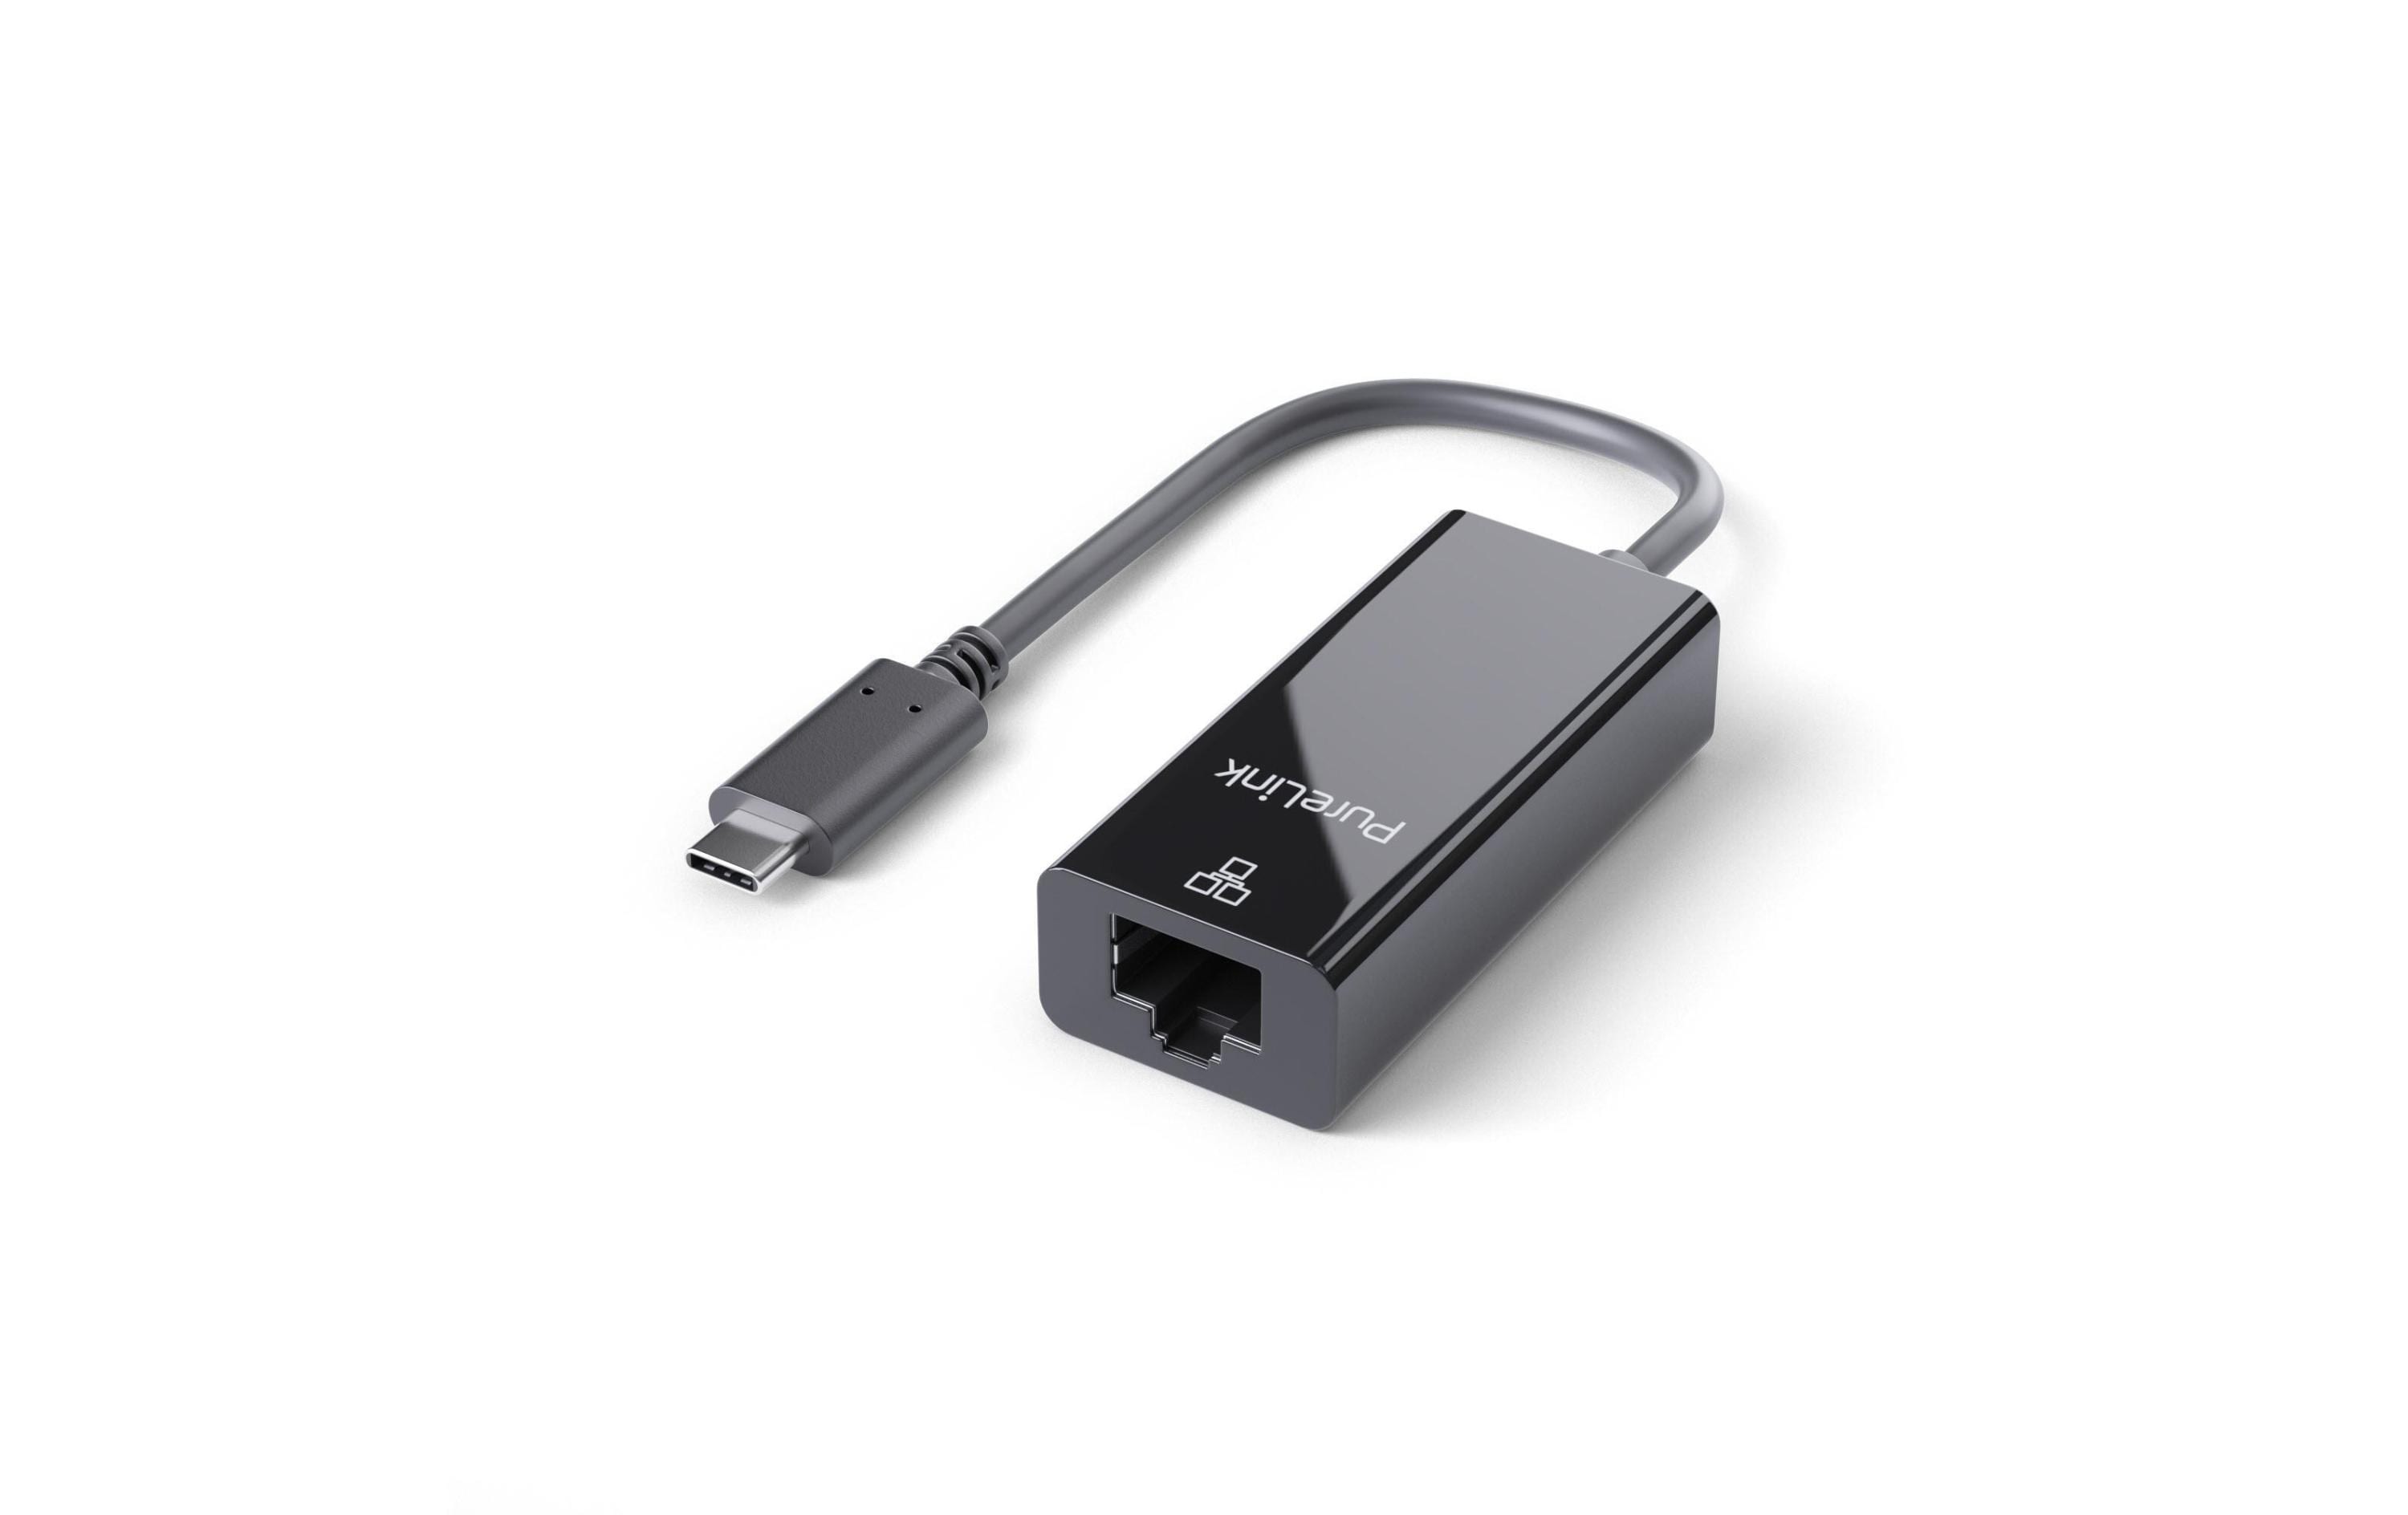 PureLink Netzwerk-Adapter IS261 USB-C - RJ-45, schwarz